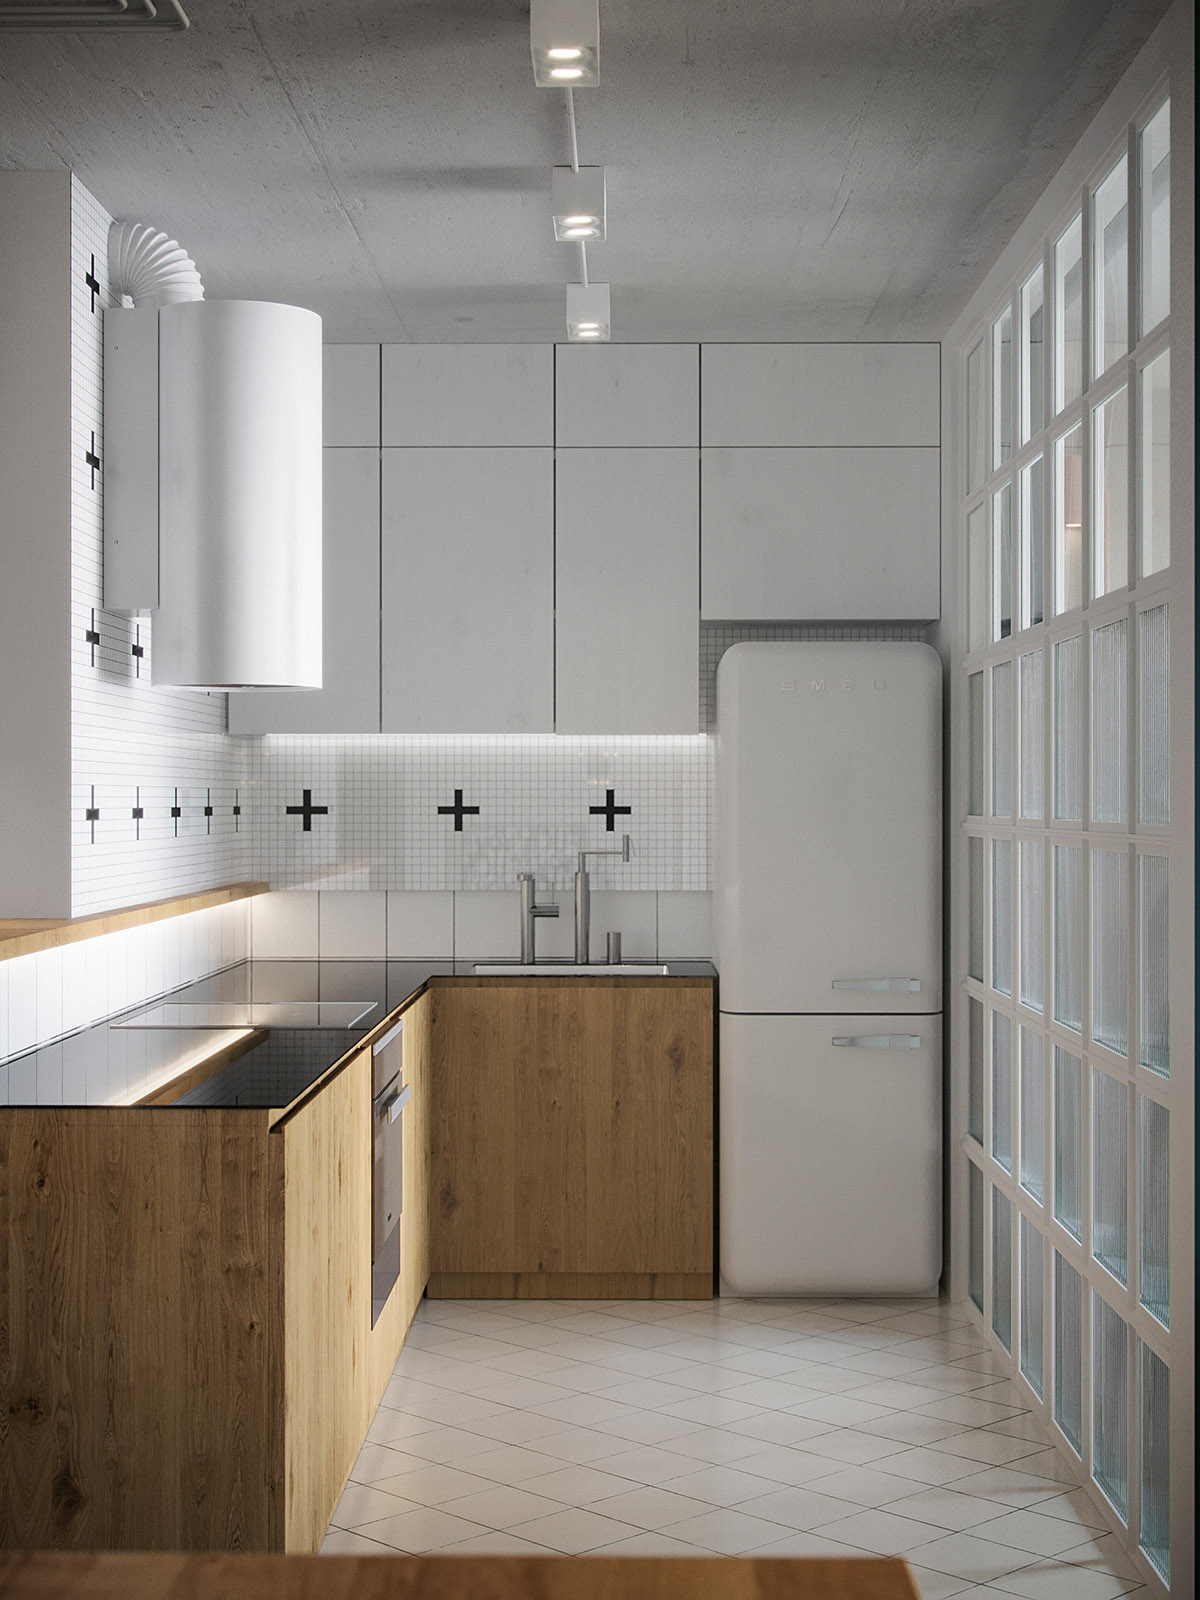 white-and-wood-kitchen.jpg